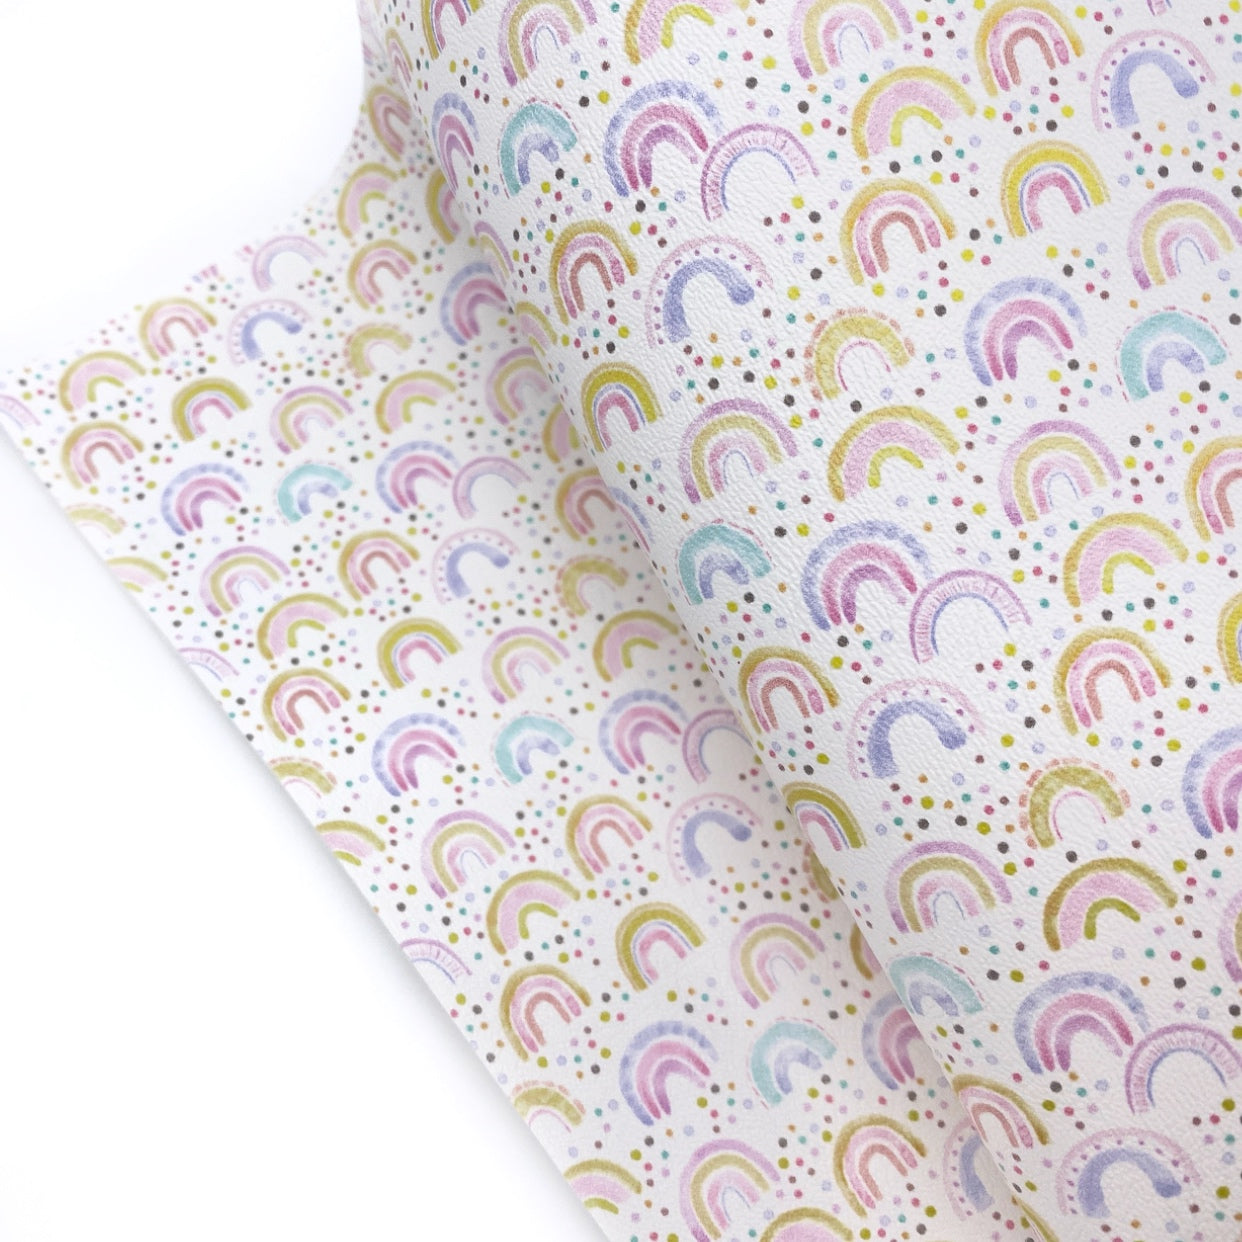 Pastel Polka Dot Rainbows Premium Faux Leather Fabric Sheets